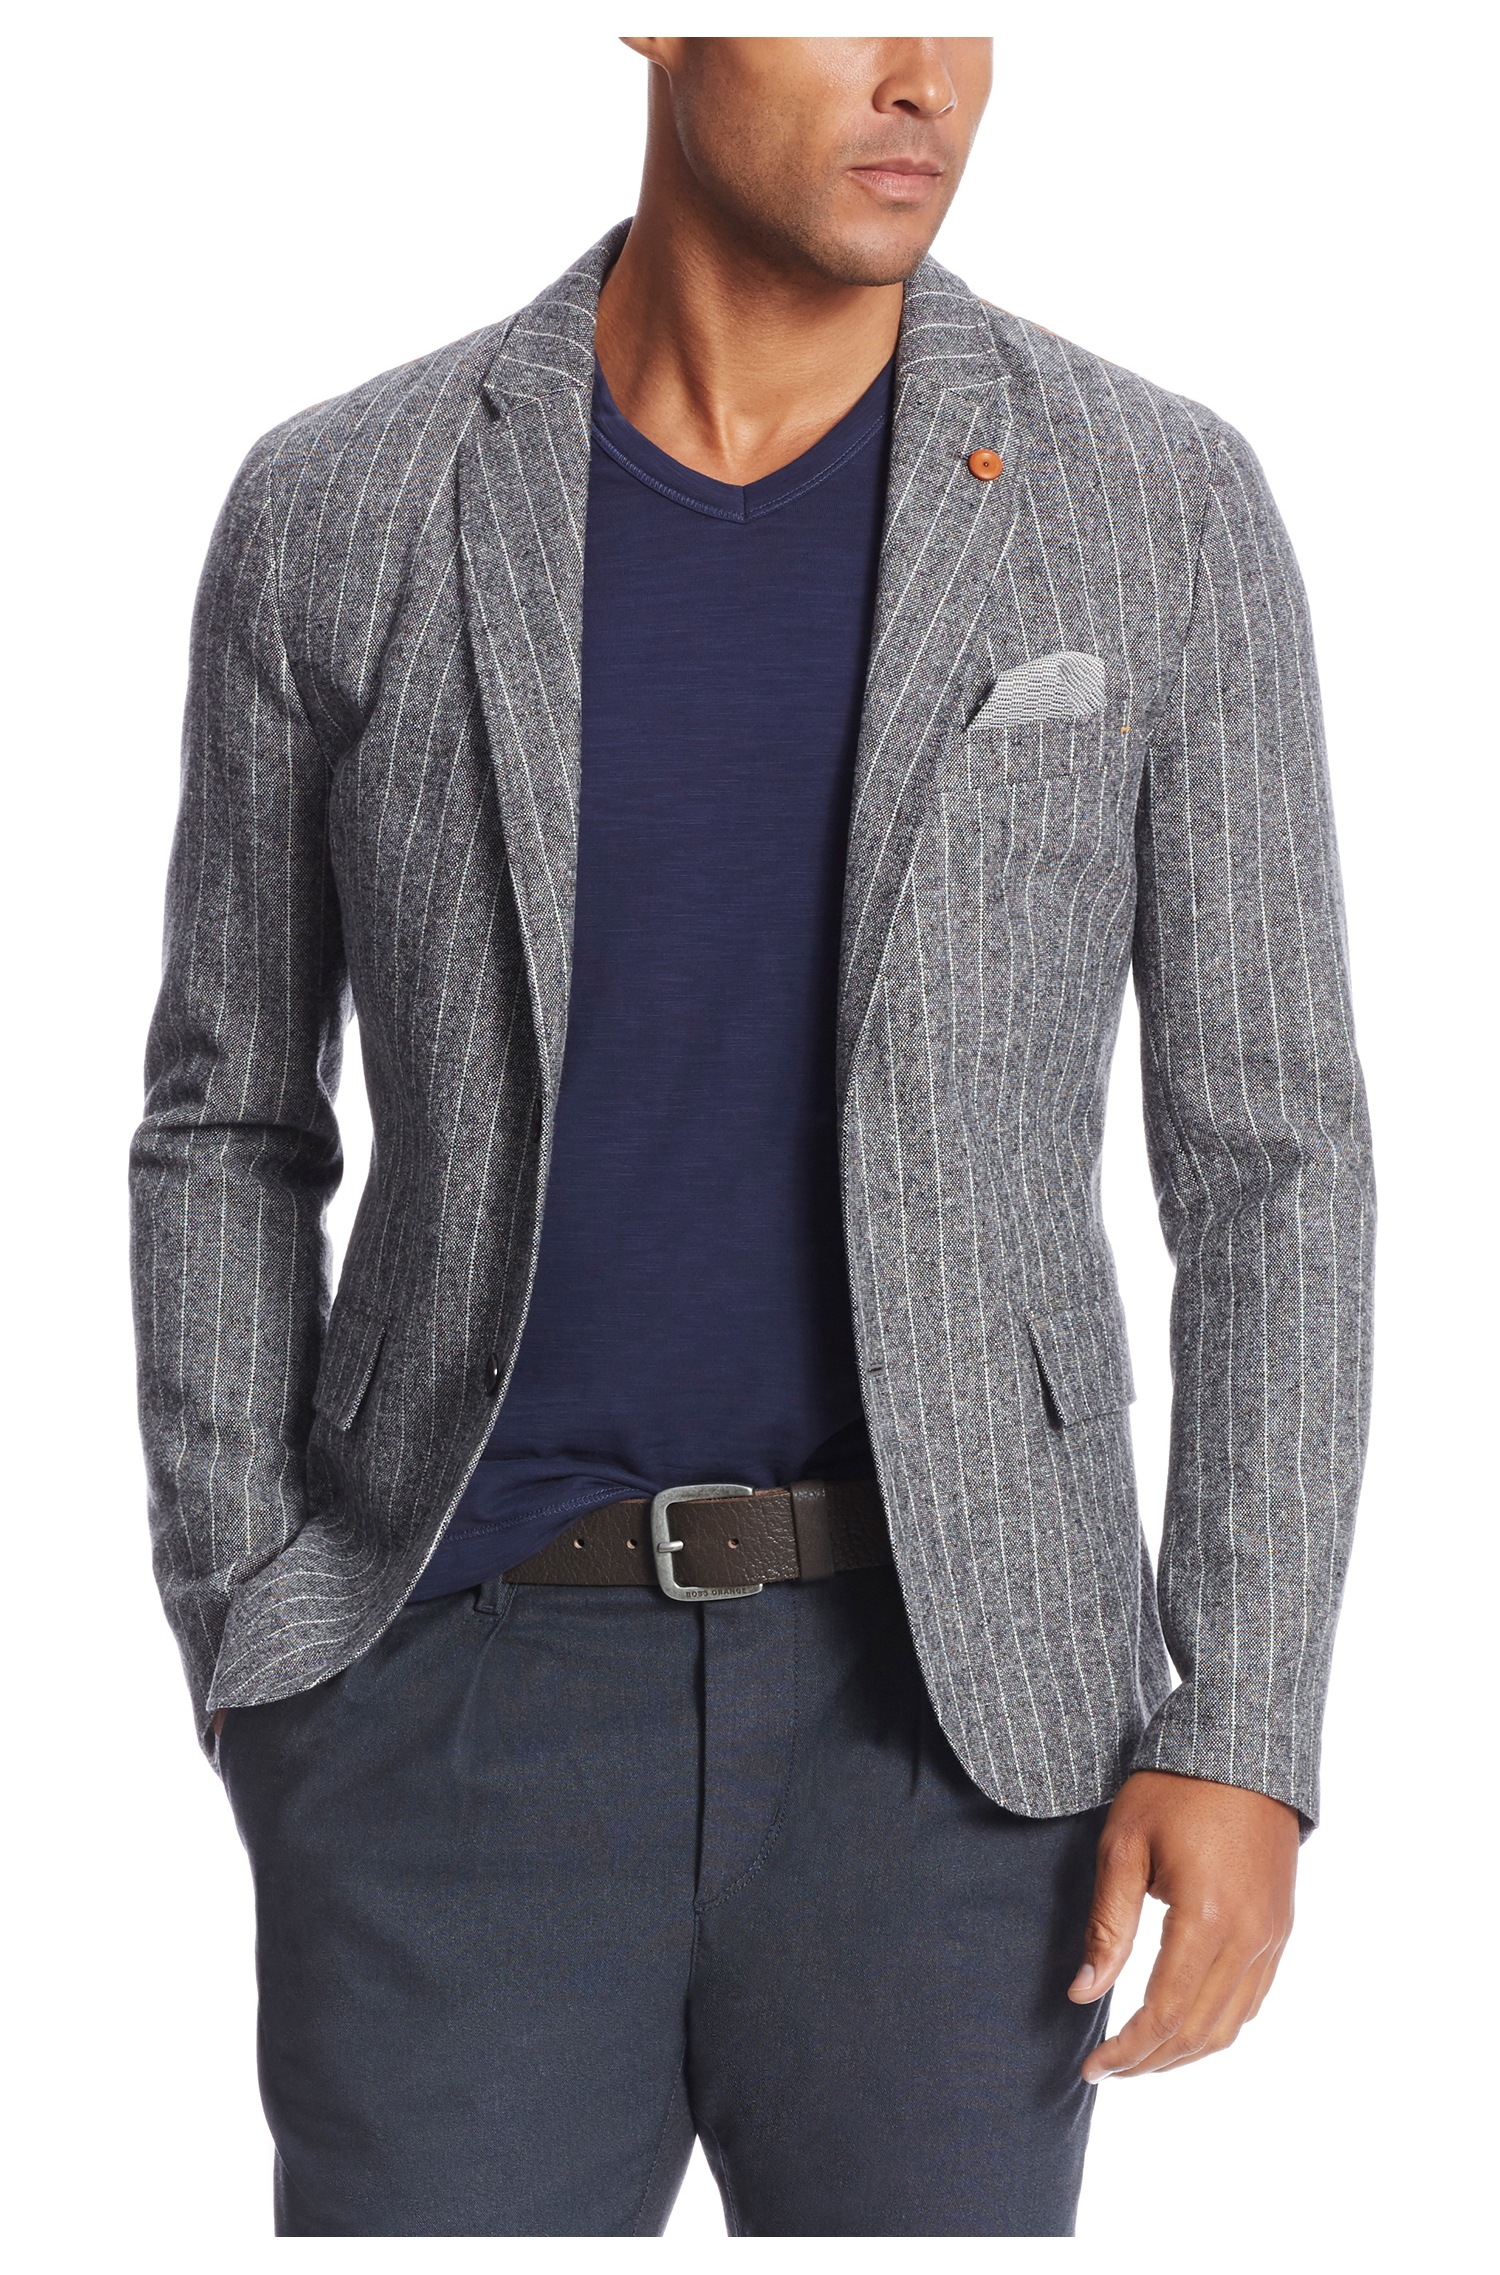 BOSS Orange 'beneslim' | Slim Fit, Stretch Wool Blend Sport Coat in Light  Grey (Gray) for Men - Lyst